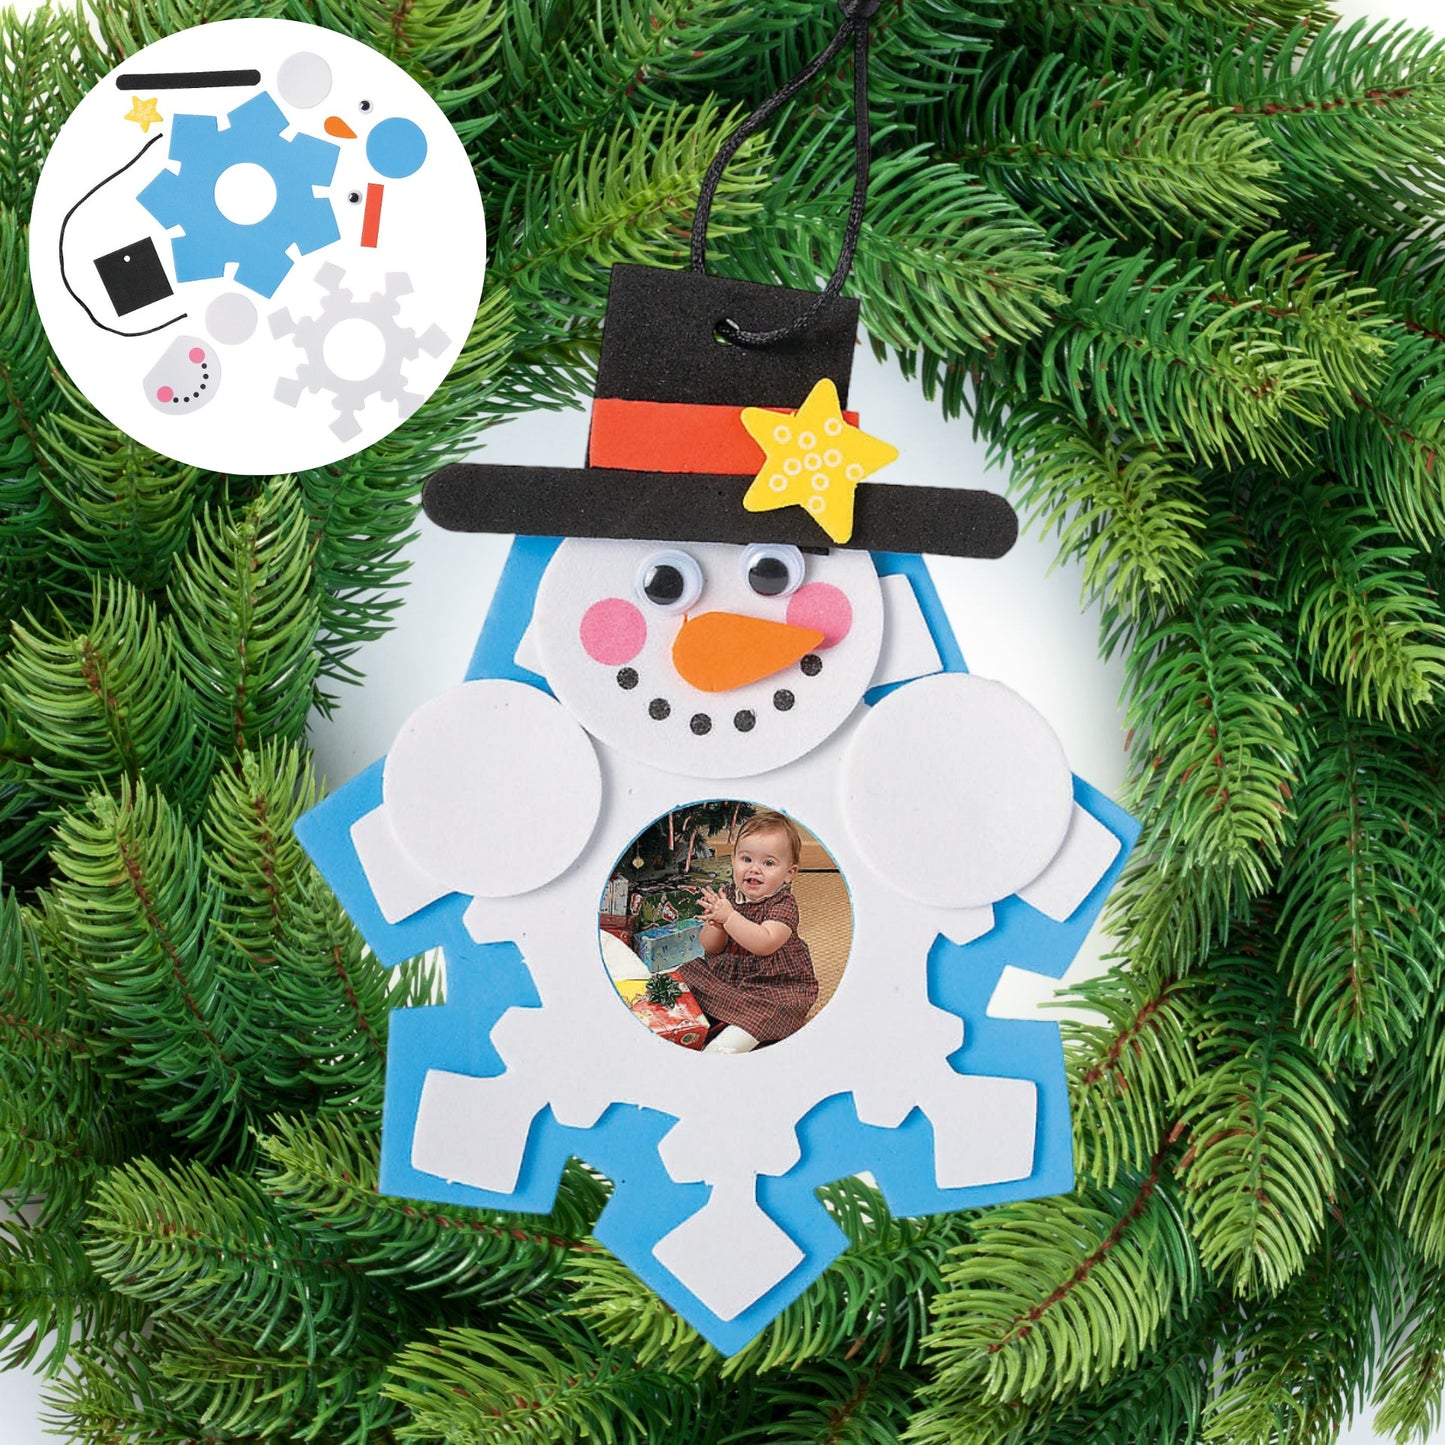 Ivy Kids Holiday Fun Kit featuring Snowmen at Christmas